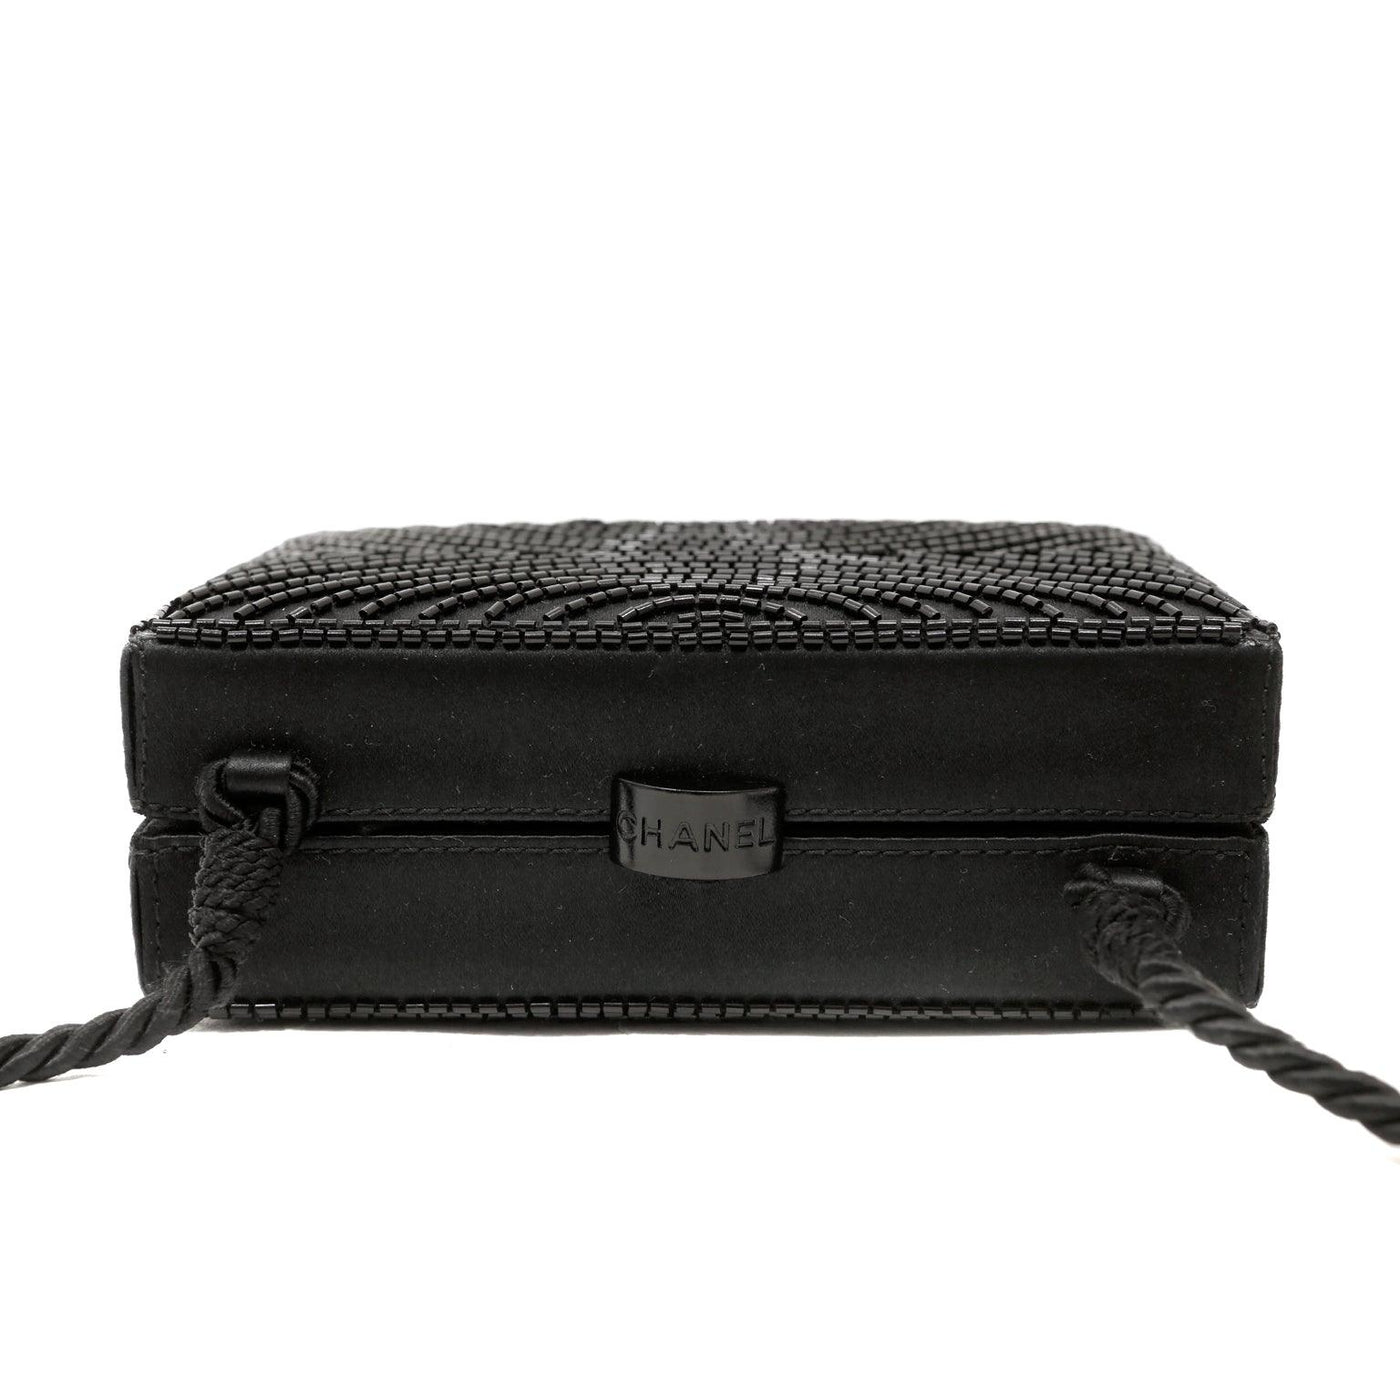 Chanel Black Vintage Beaded Mini Box Evening Bag - Only Authentics